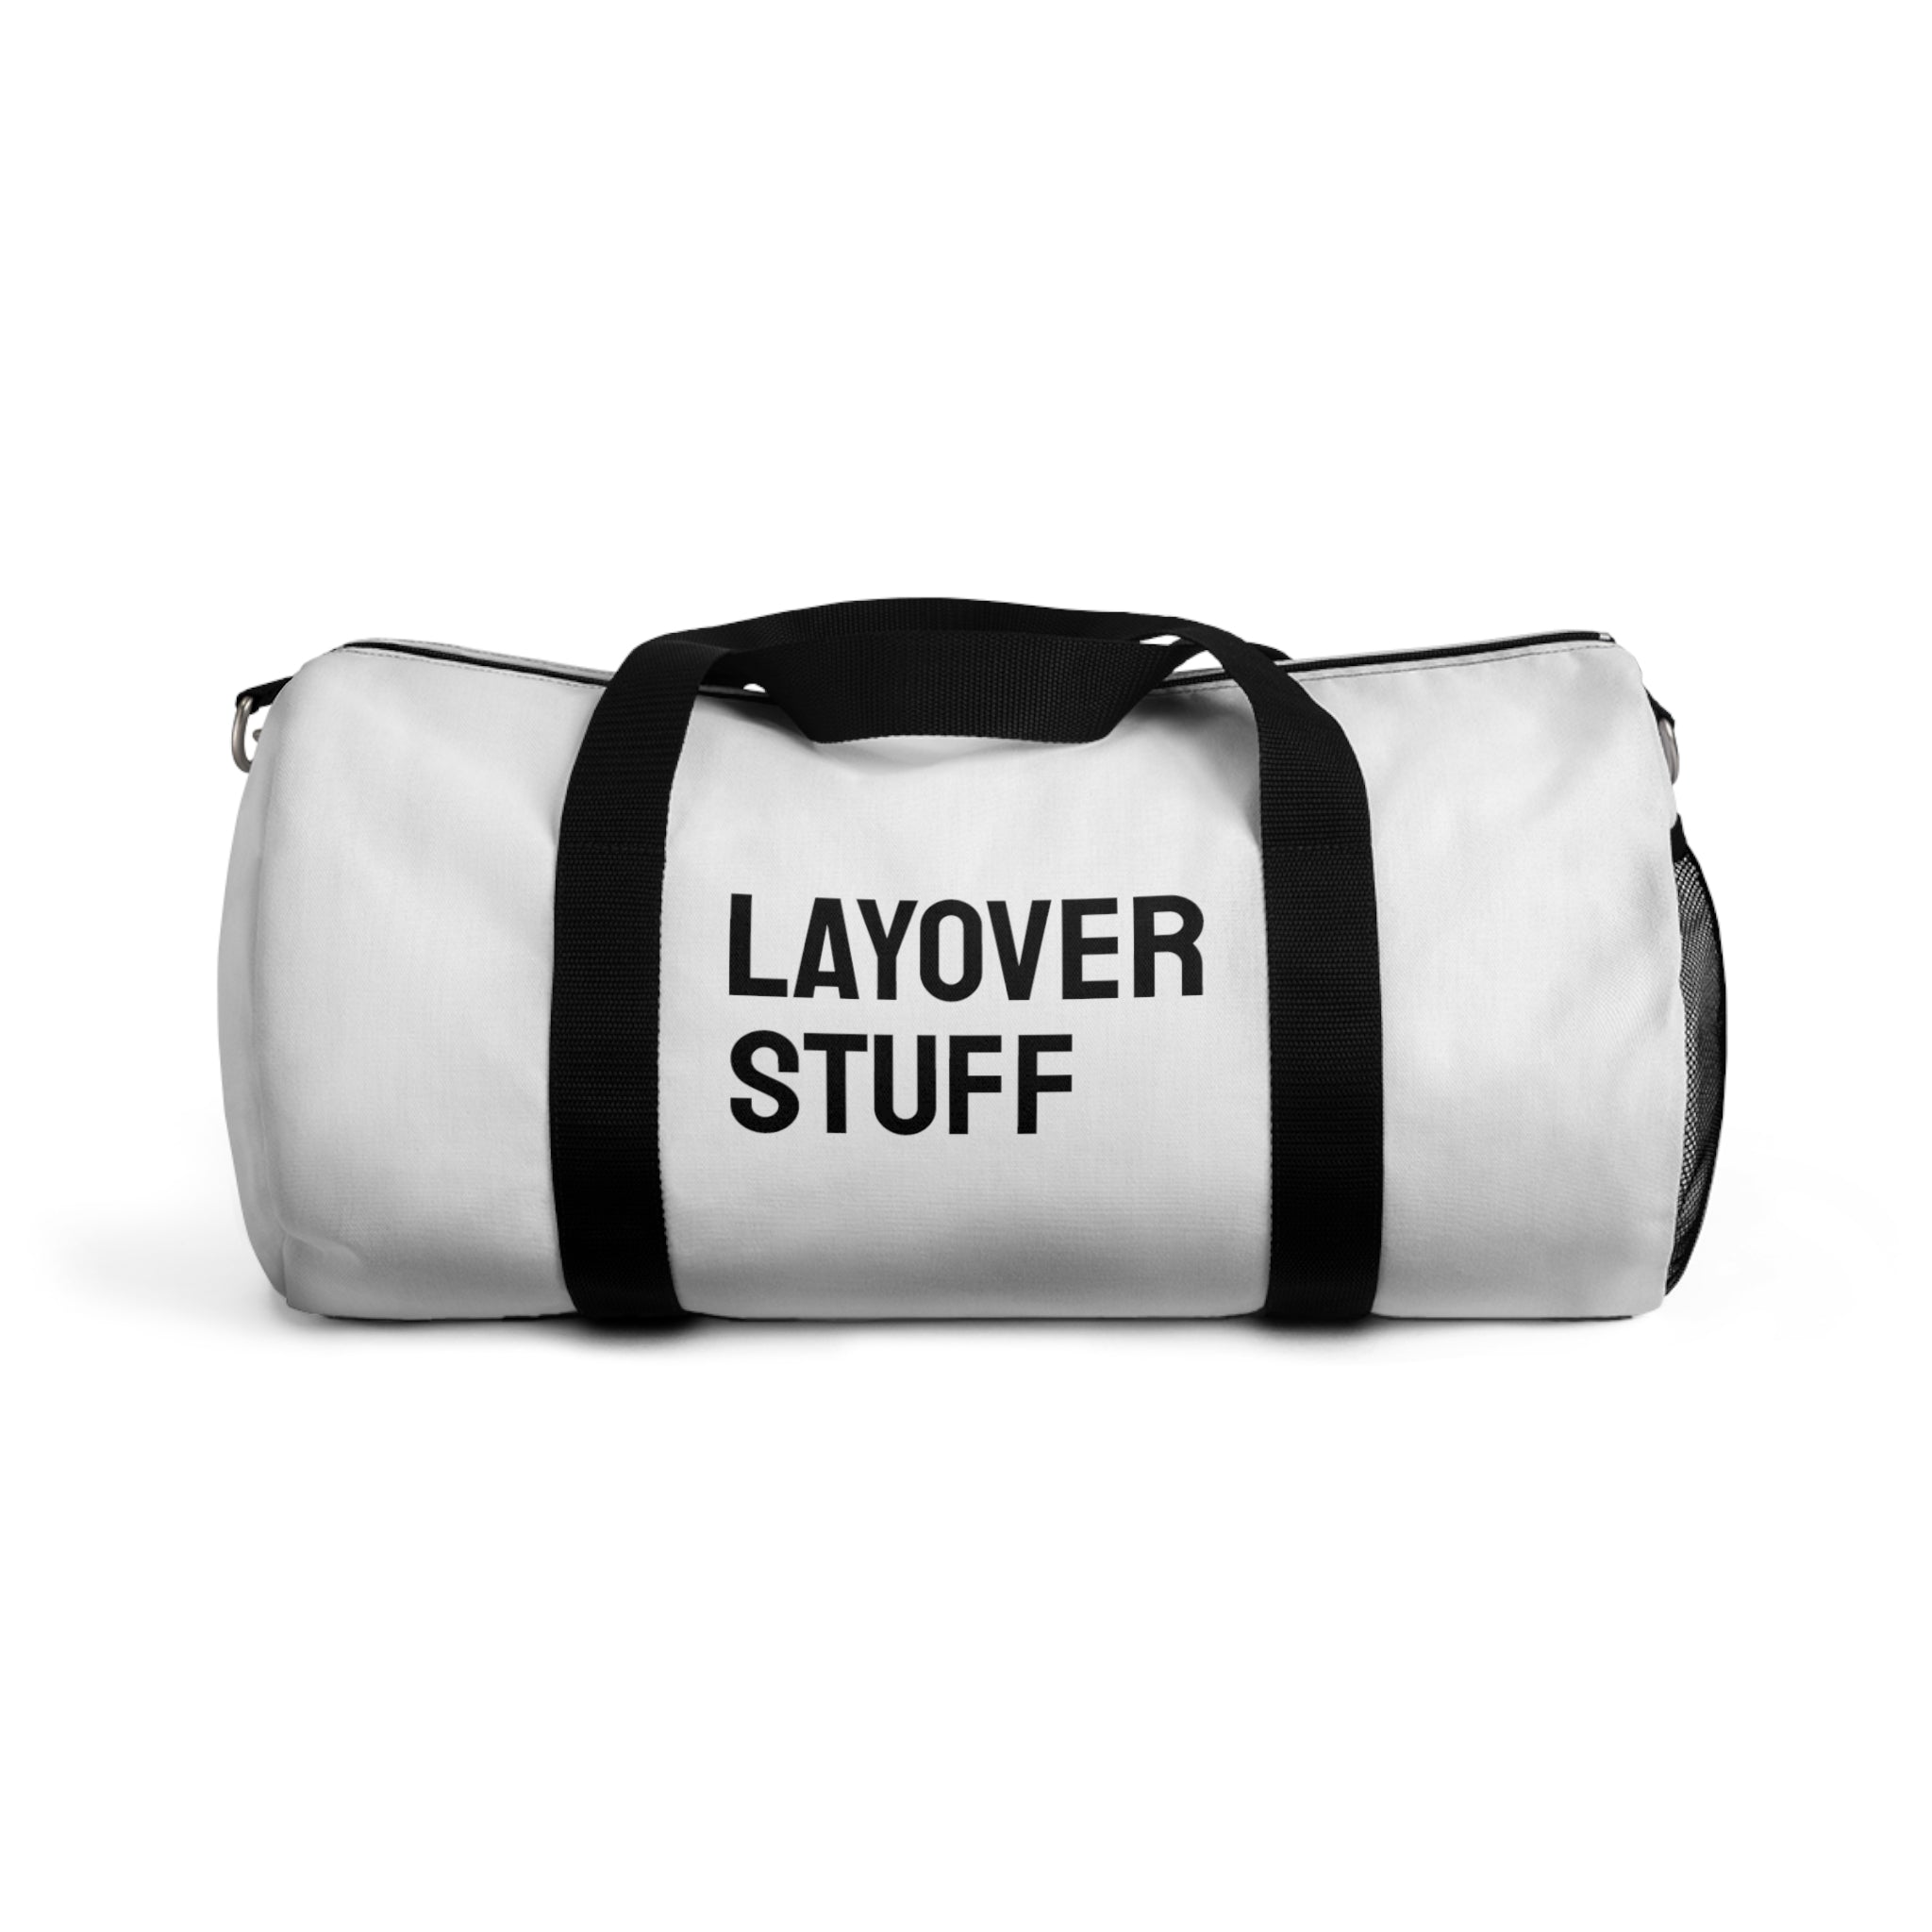 Layover stuff Duffle Bag (White)